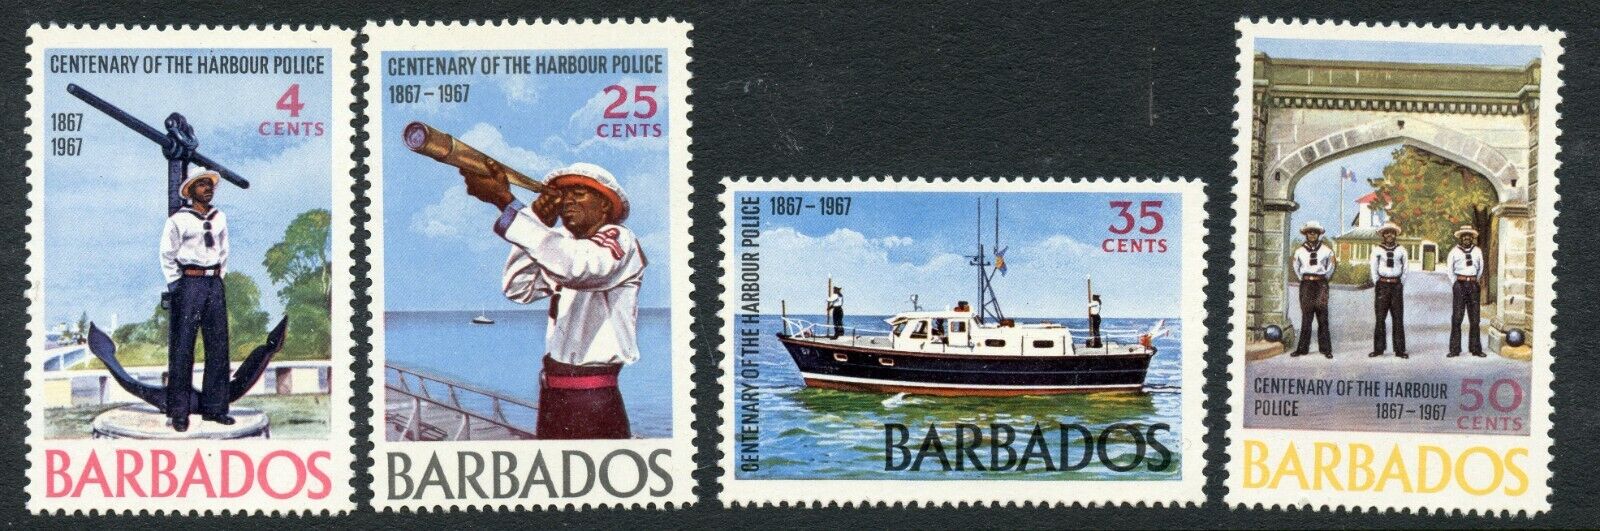 Barbados Scott 294-297 Centenary Of Bridgetown Harbor Police Mnh 1967